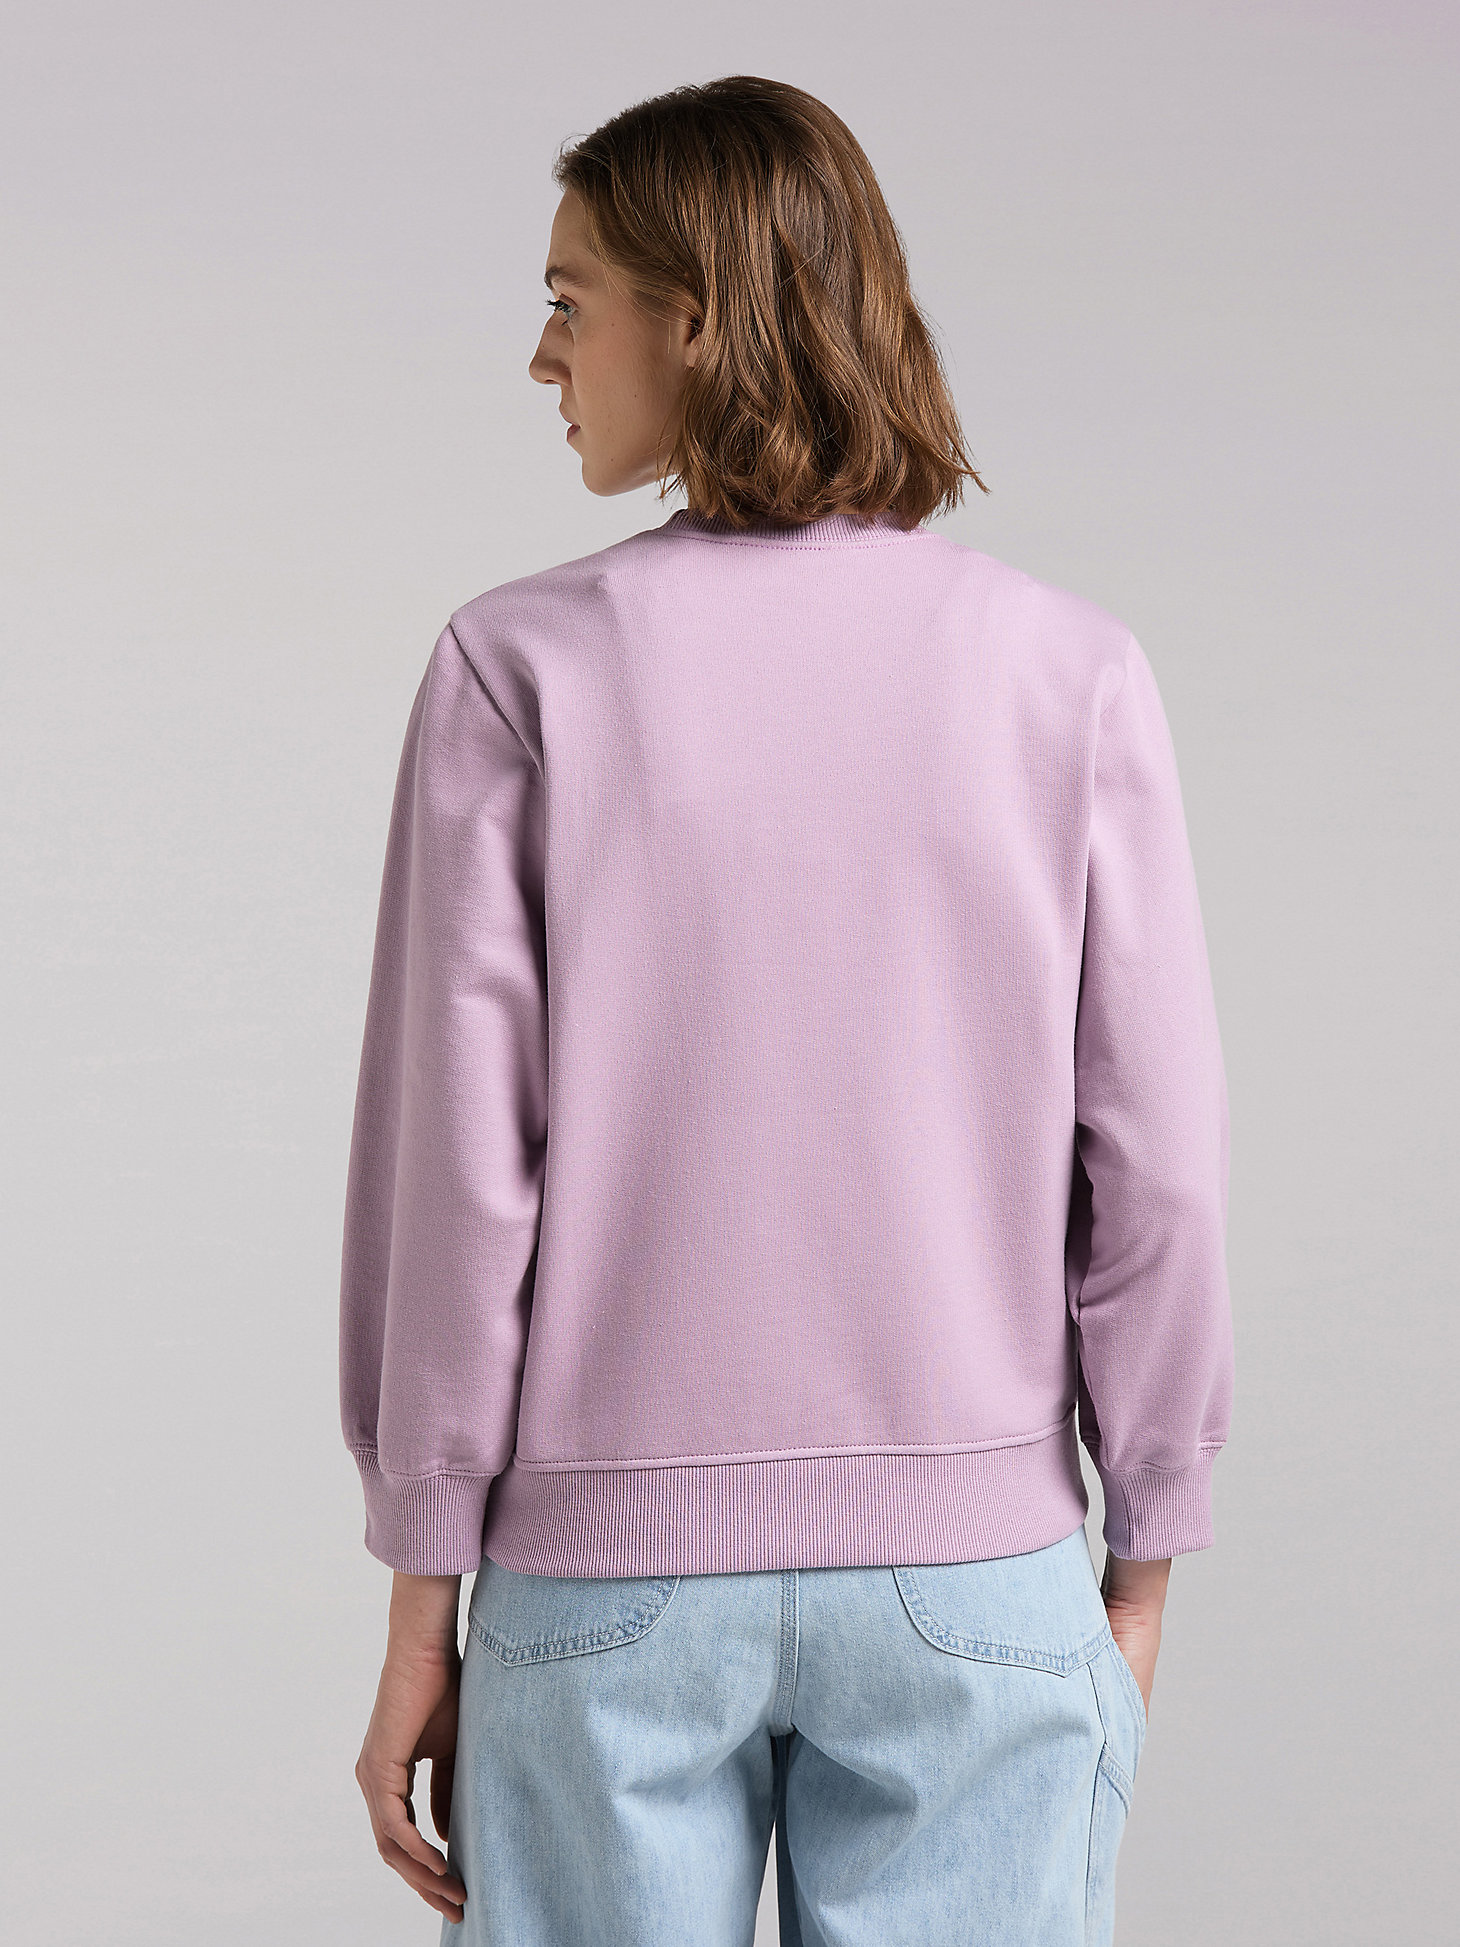 Women's Lee European Collection Shrunken Sweatshirt in Plum alternative view 1